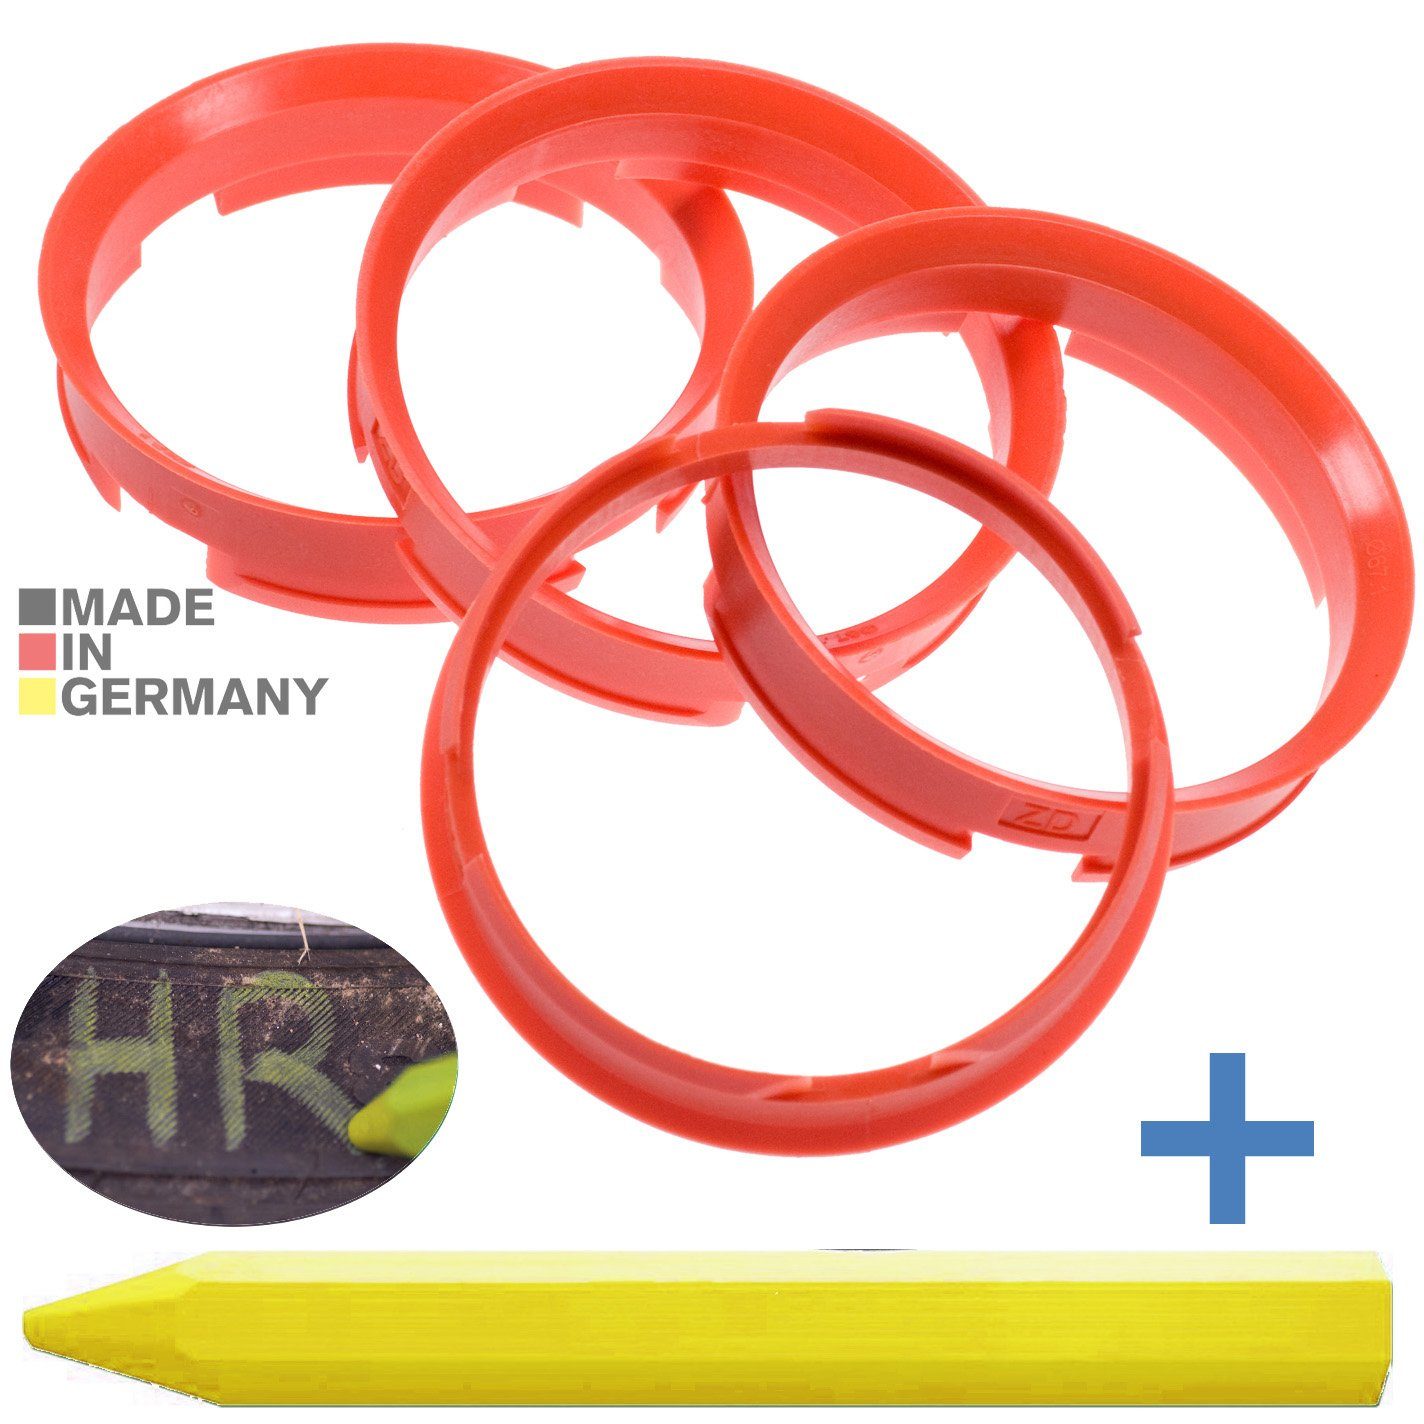 Felgen Zentrierringe Maße: 1x mm x 72,6 + Reifenstift Reifen 67,1 Orange Fett Ringe Kreide RKC Stift, 4X